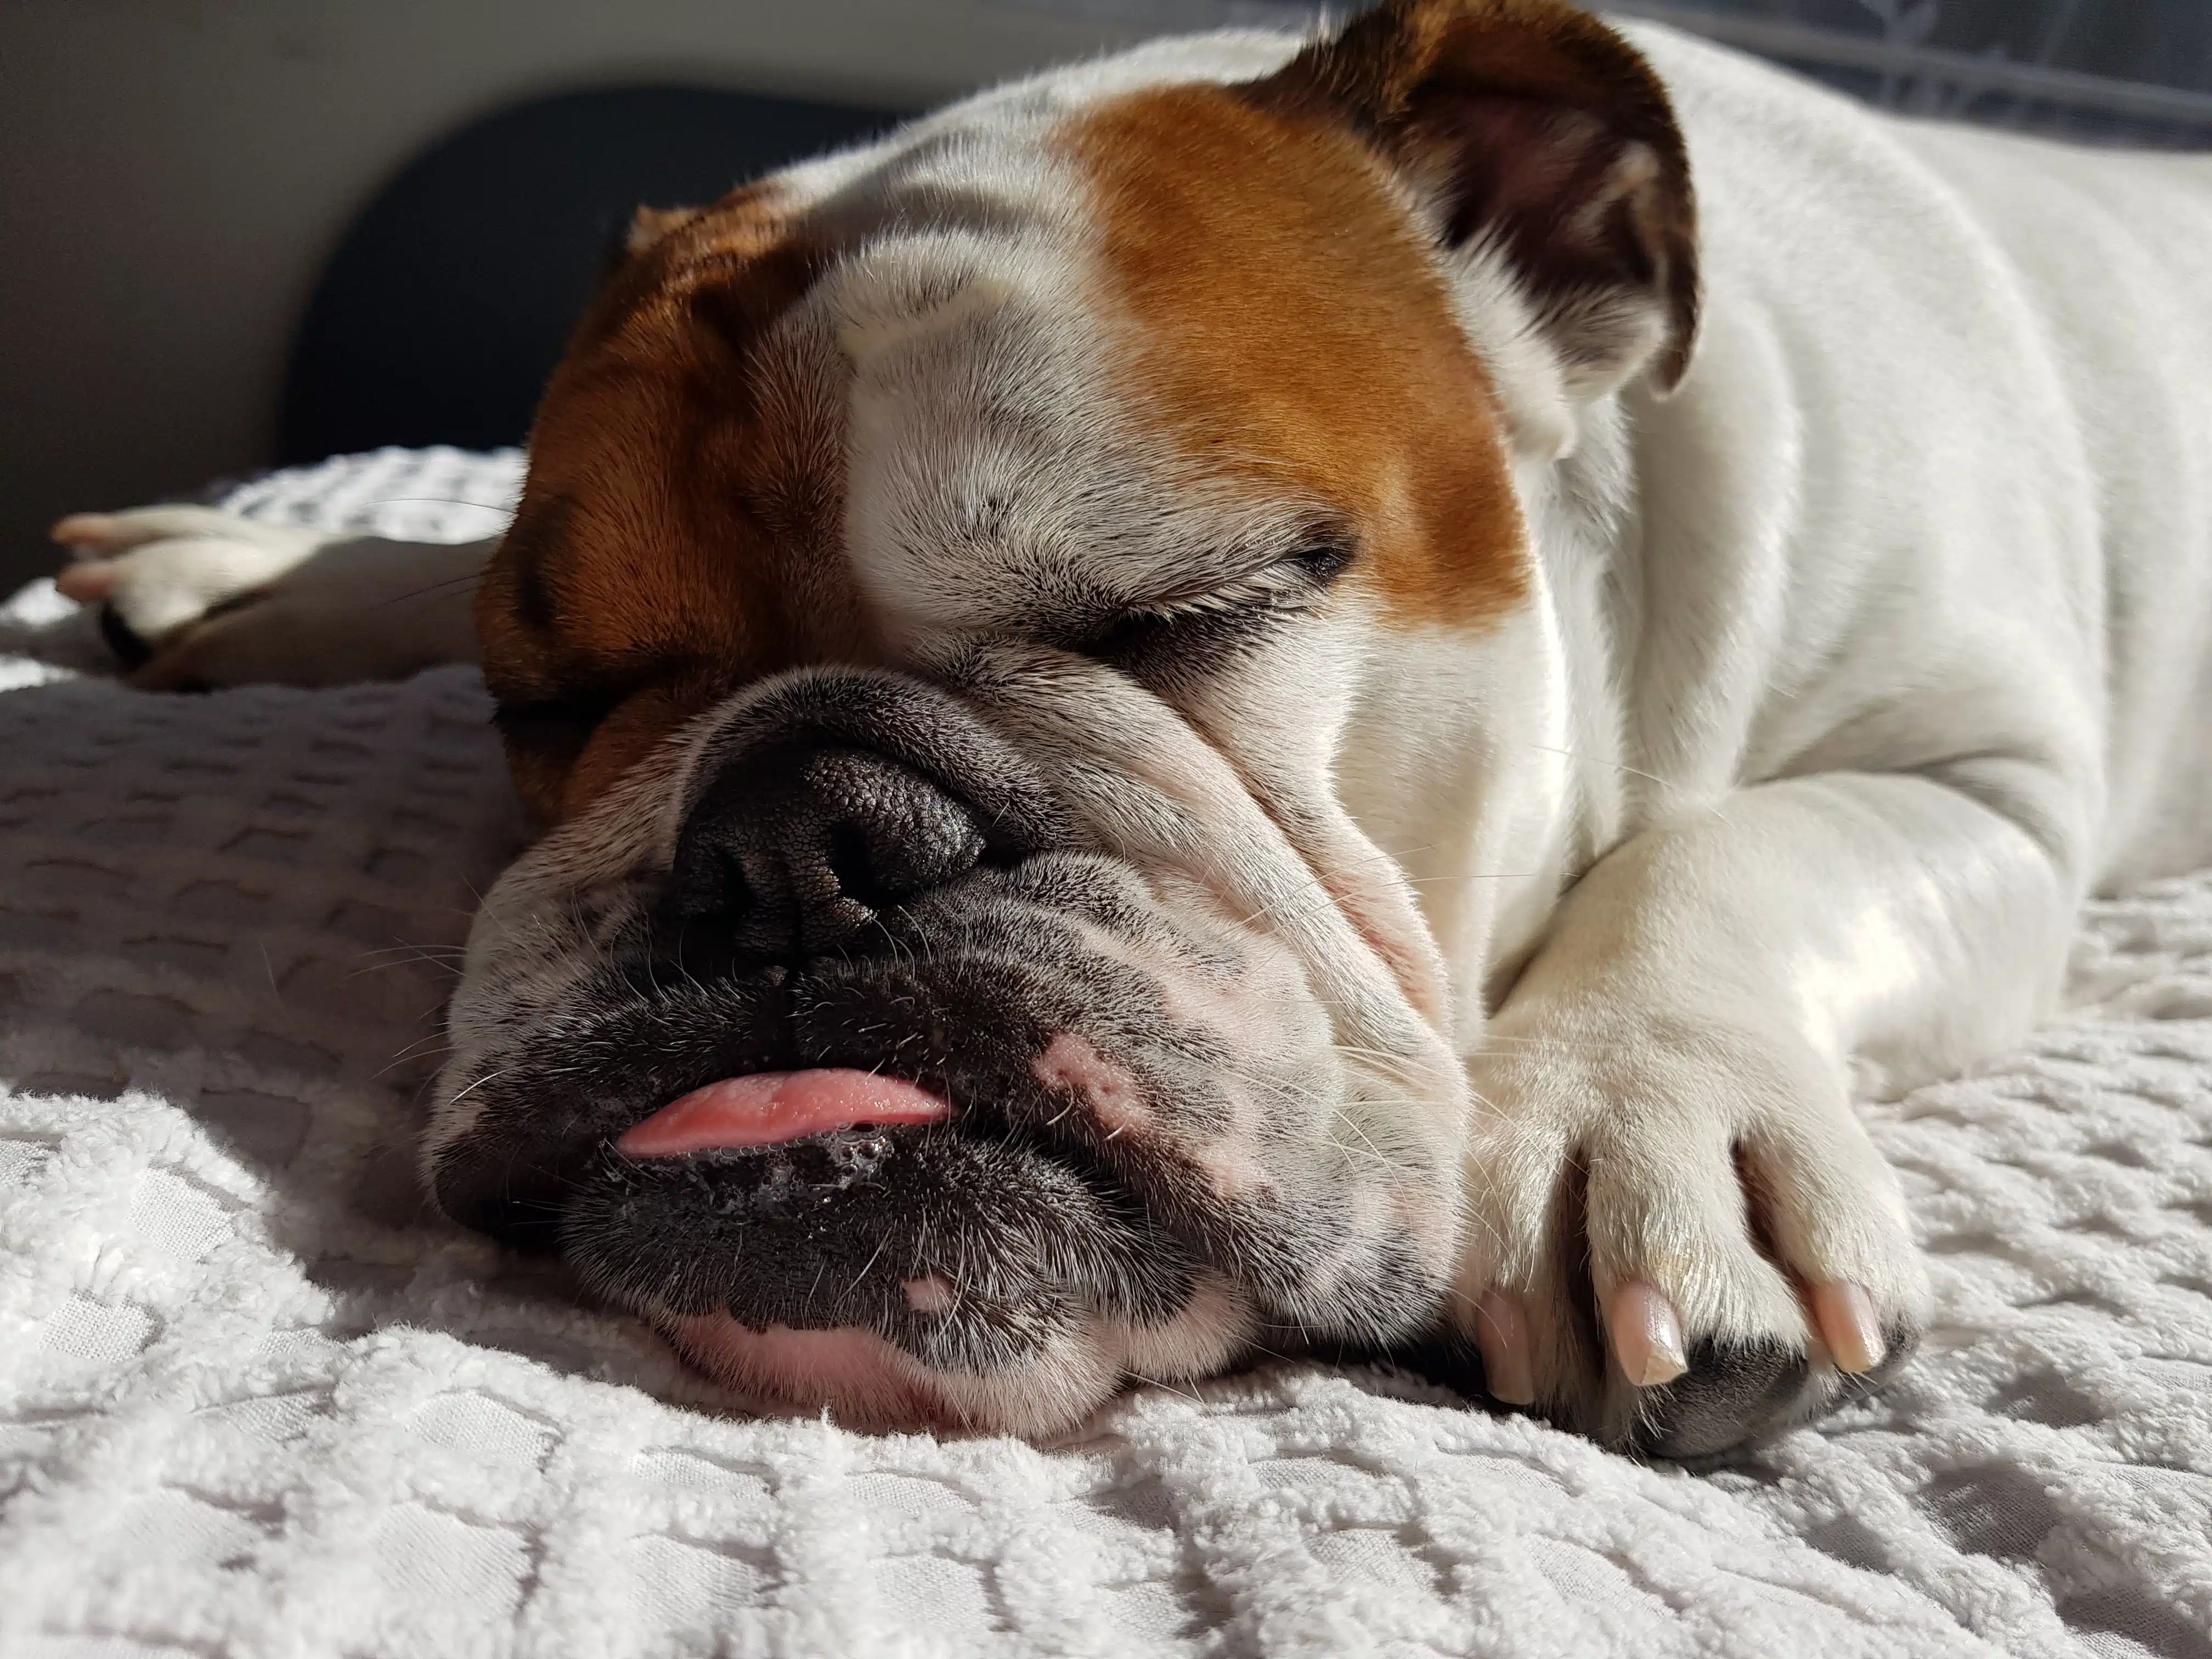 Should dogs like this English Bulldog sleep outside?